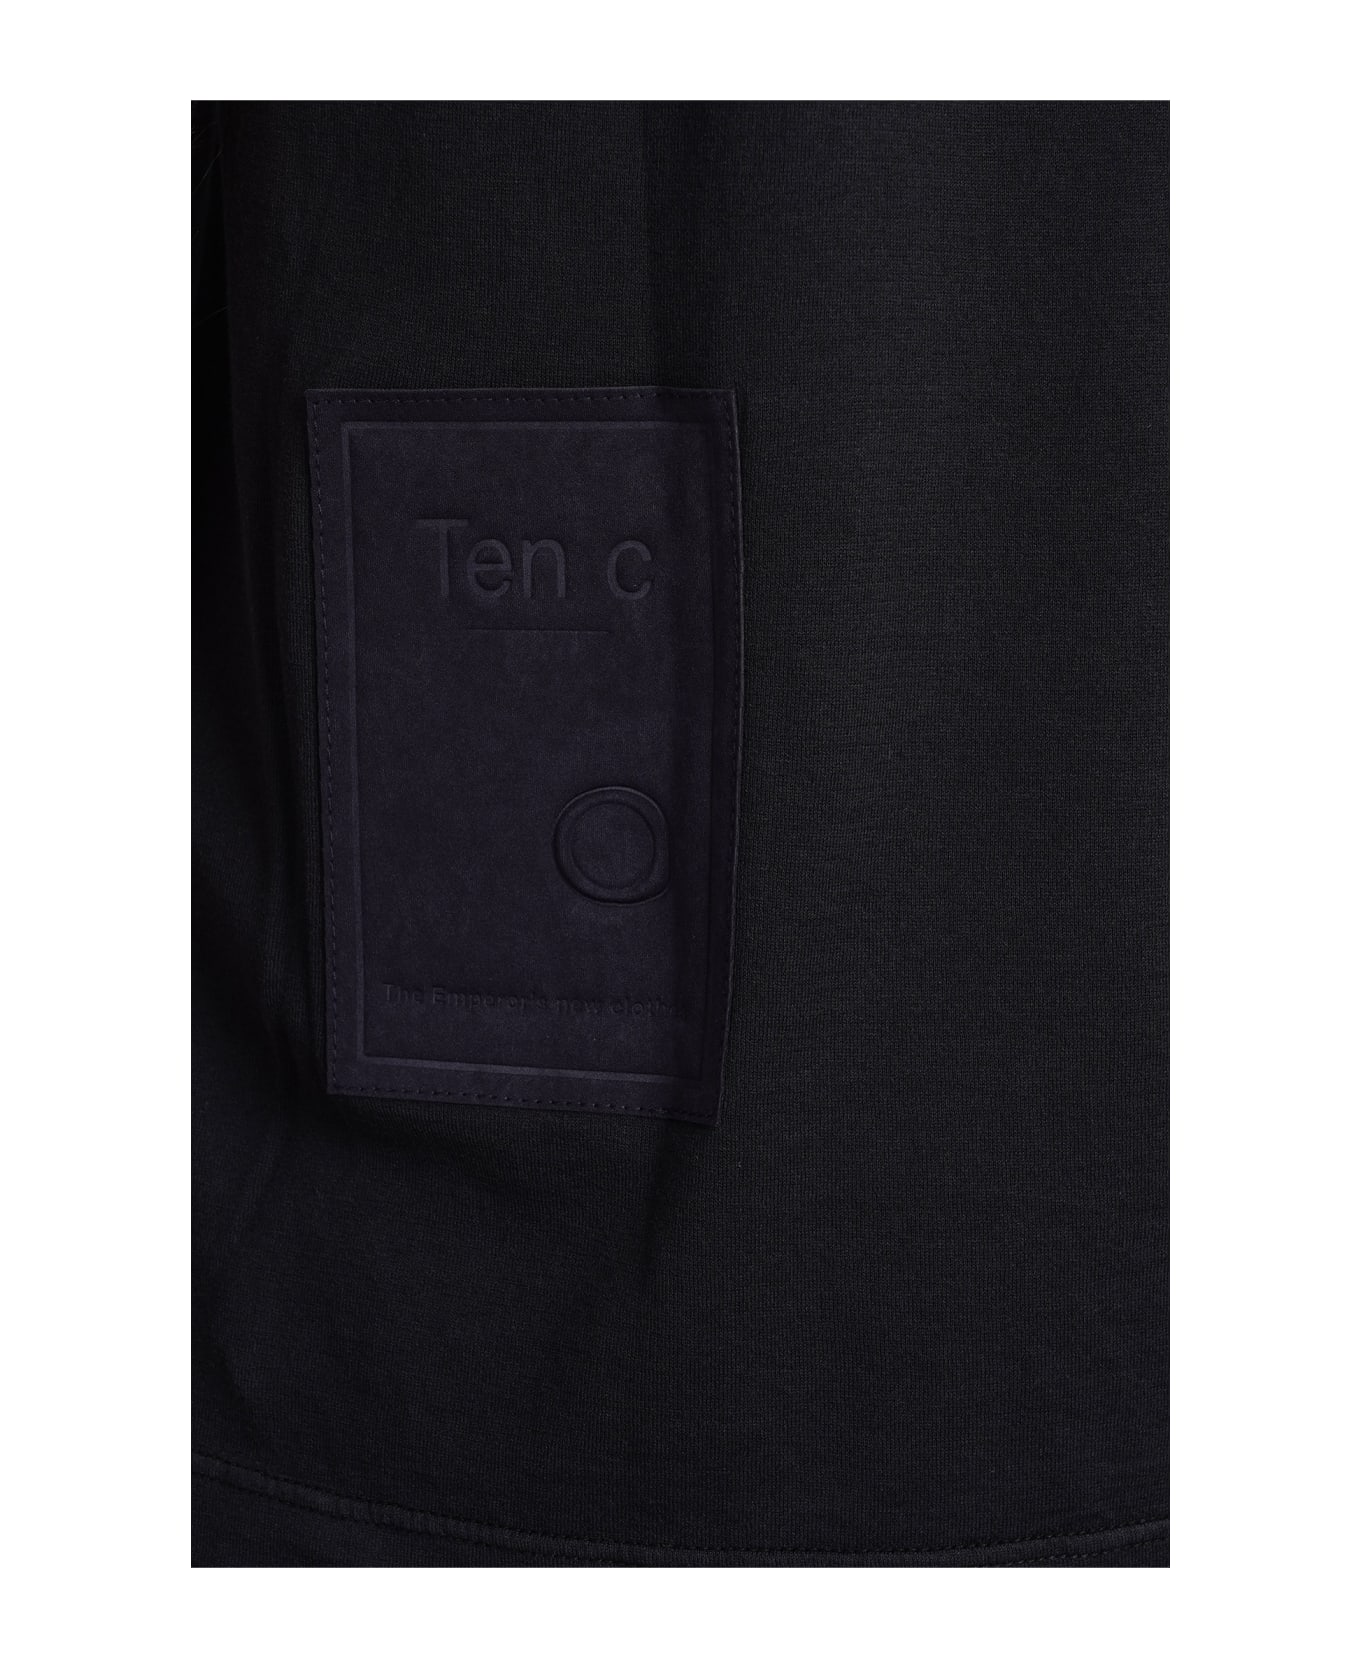 Ten C T-shirt In Black Cotton - black